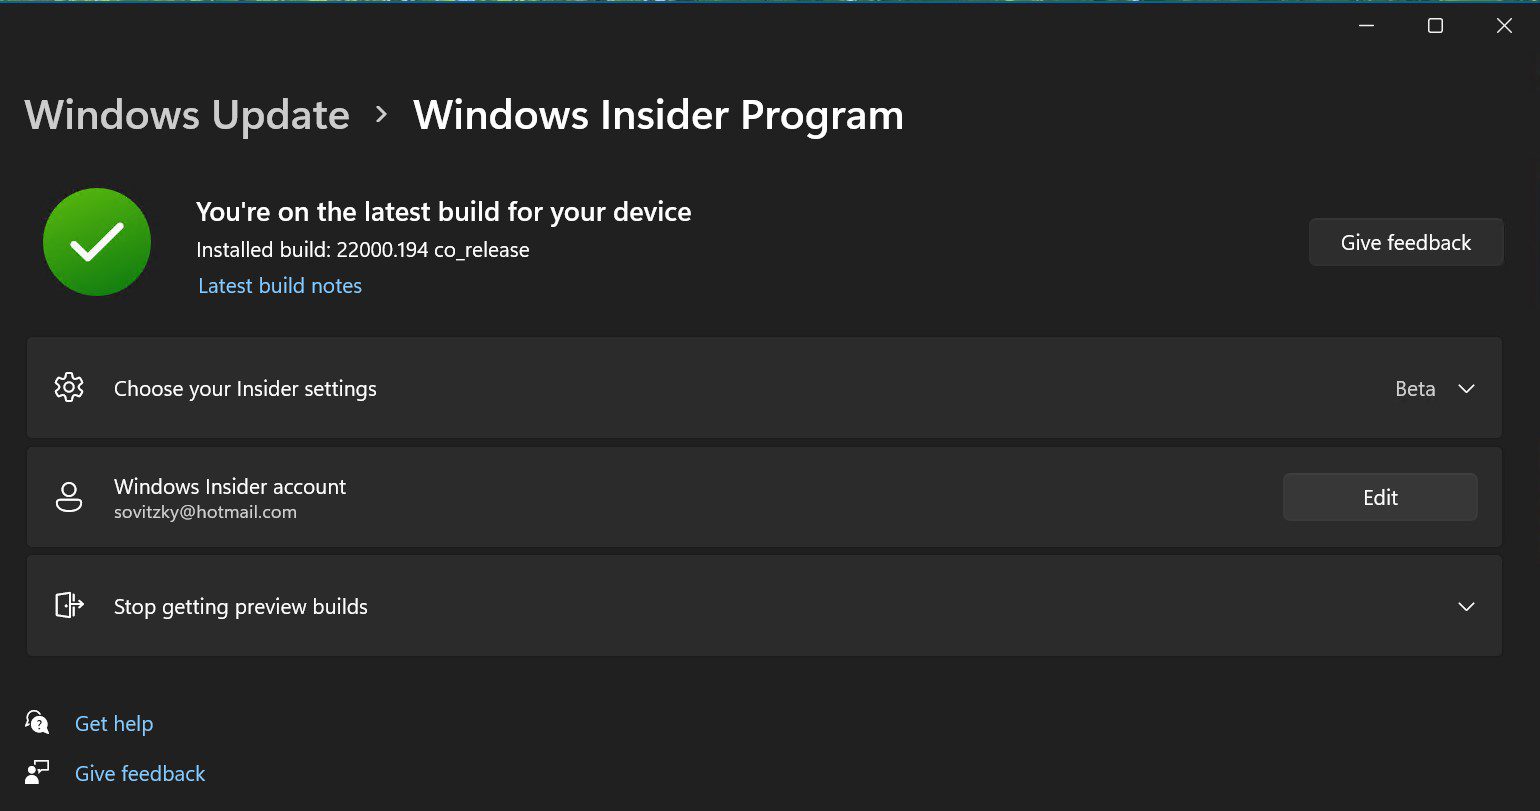 Current status of Windows Insider Program